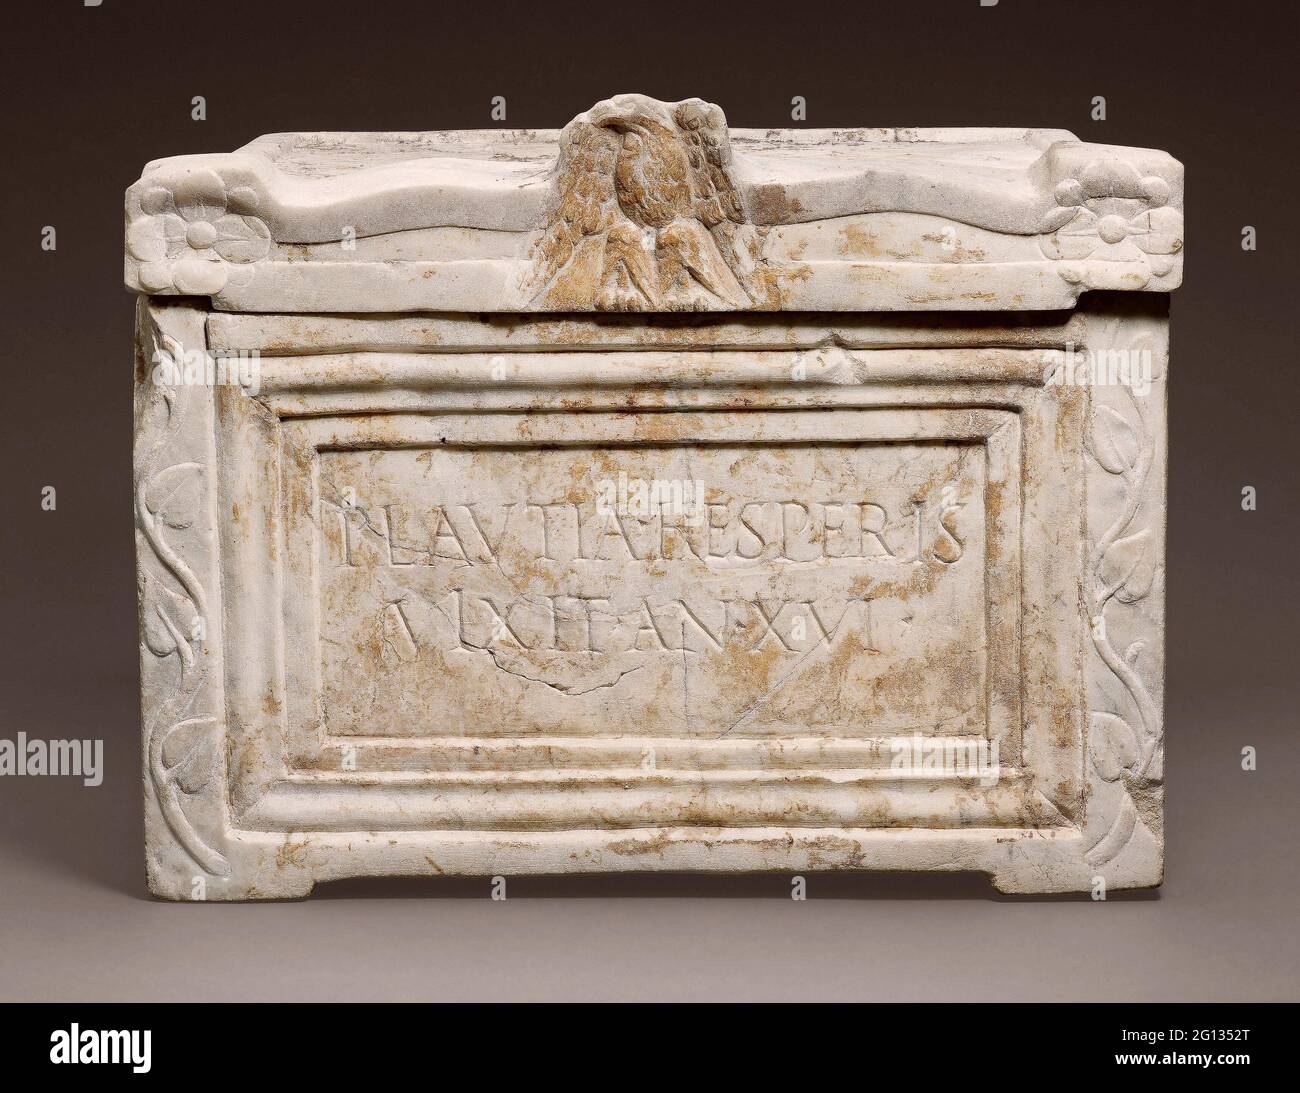 Author: Ancient Roman. Cinerary Urn of Plautia Hesperis - 1st century AD - Roman. Marble. 1 AD - 100 AD. Italy. Stock Photo